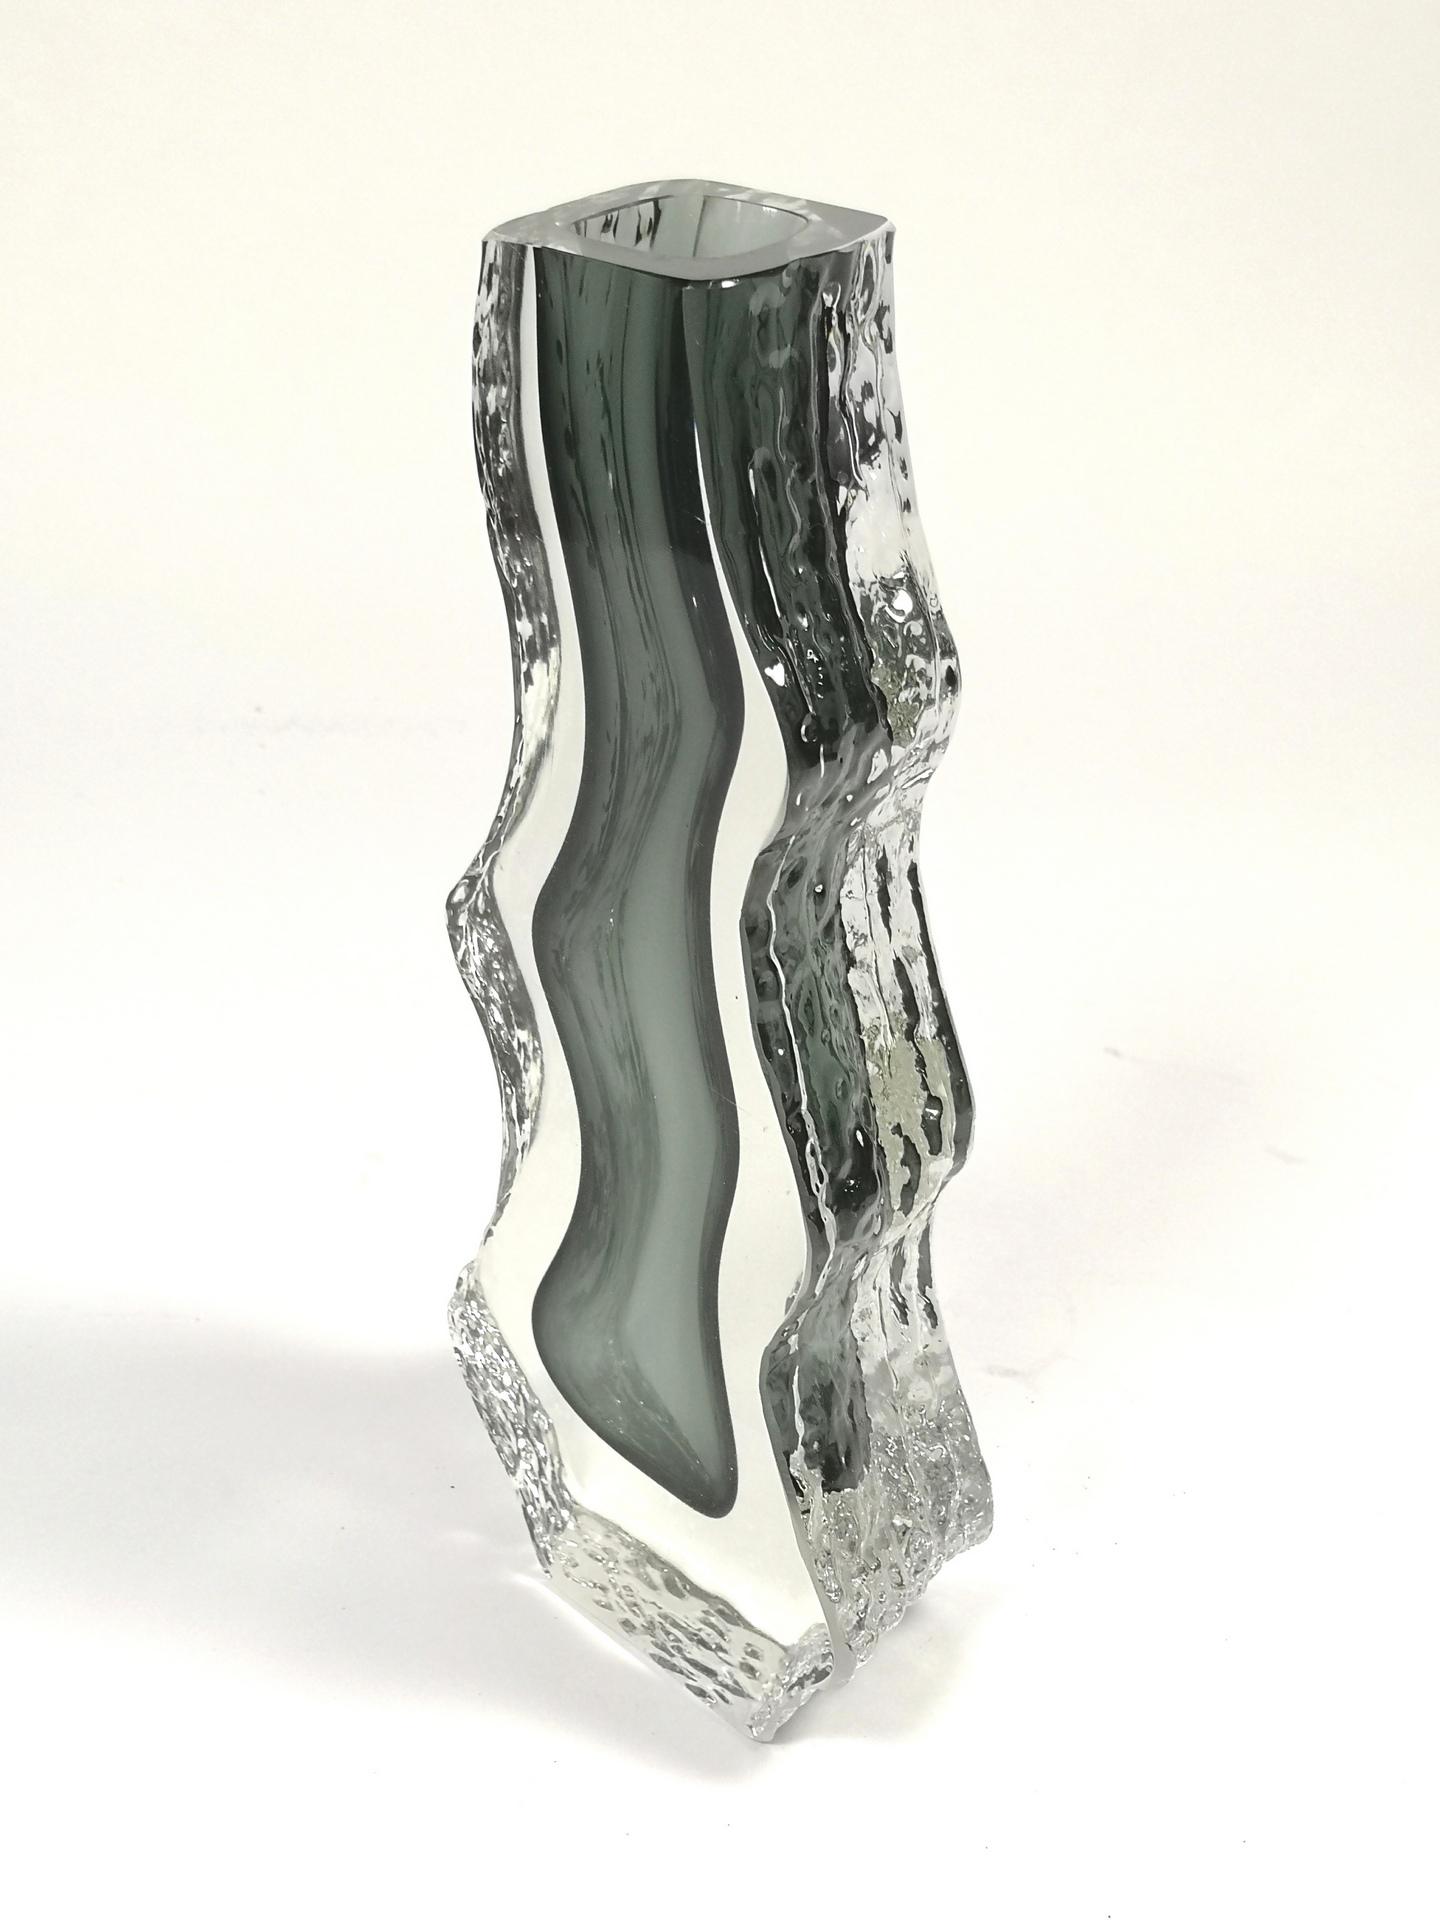 Heavy murano bicolor glass vase, hand made, 1970's.